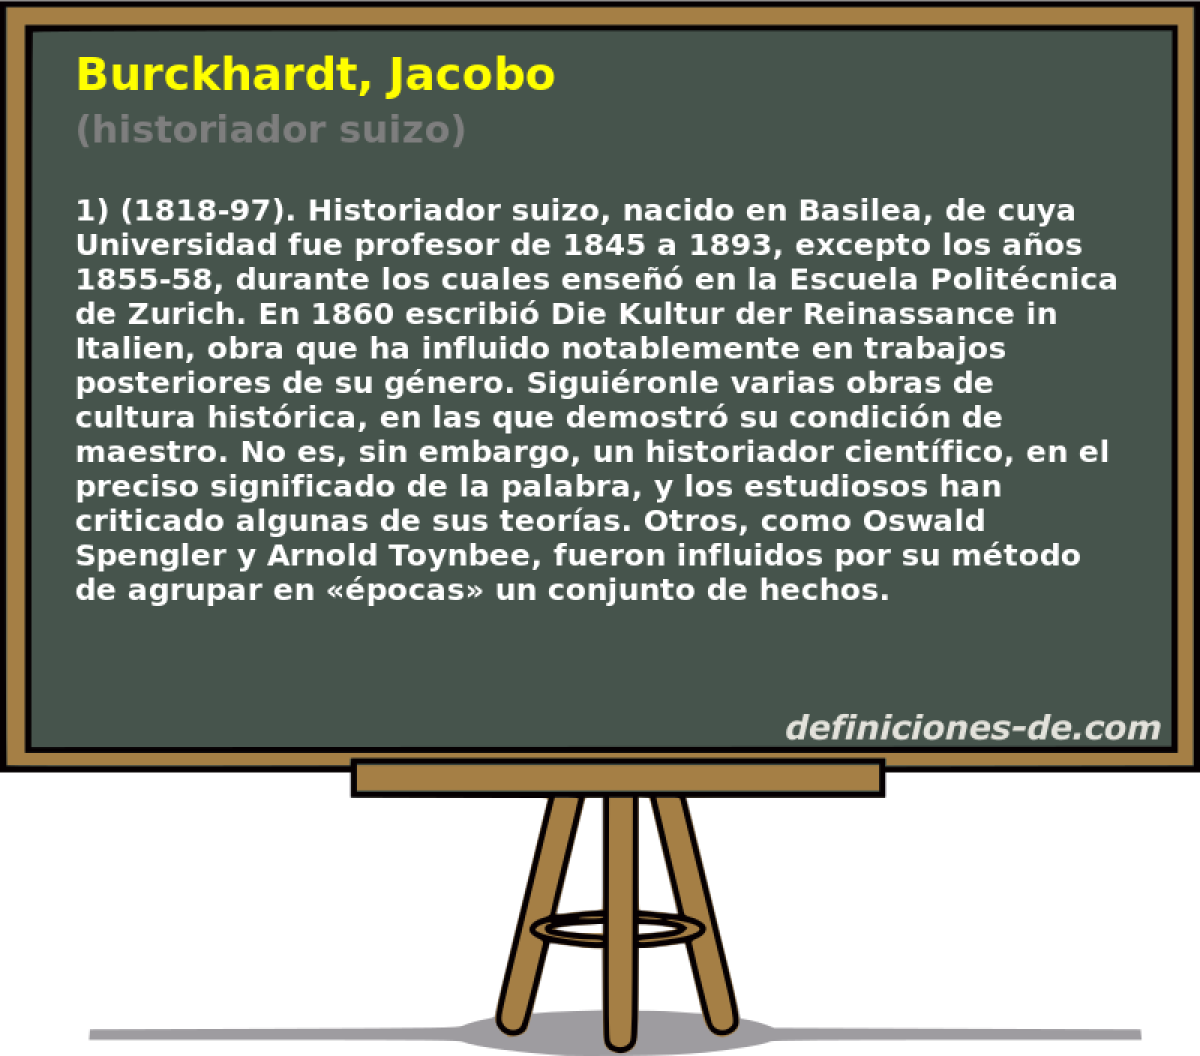 Burckhardt, Jacobo (historiador suizo)